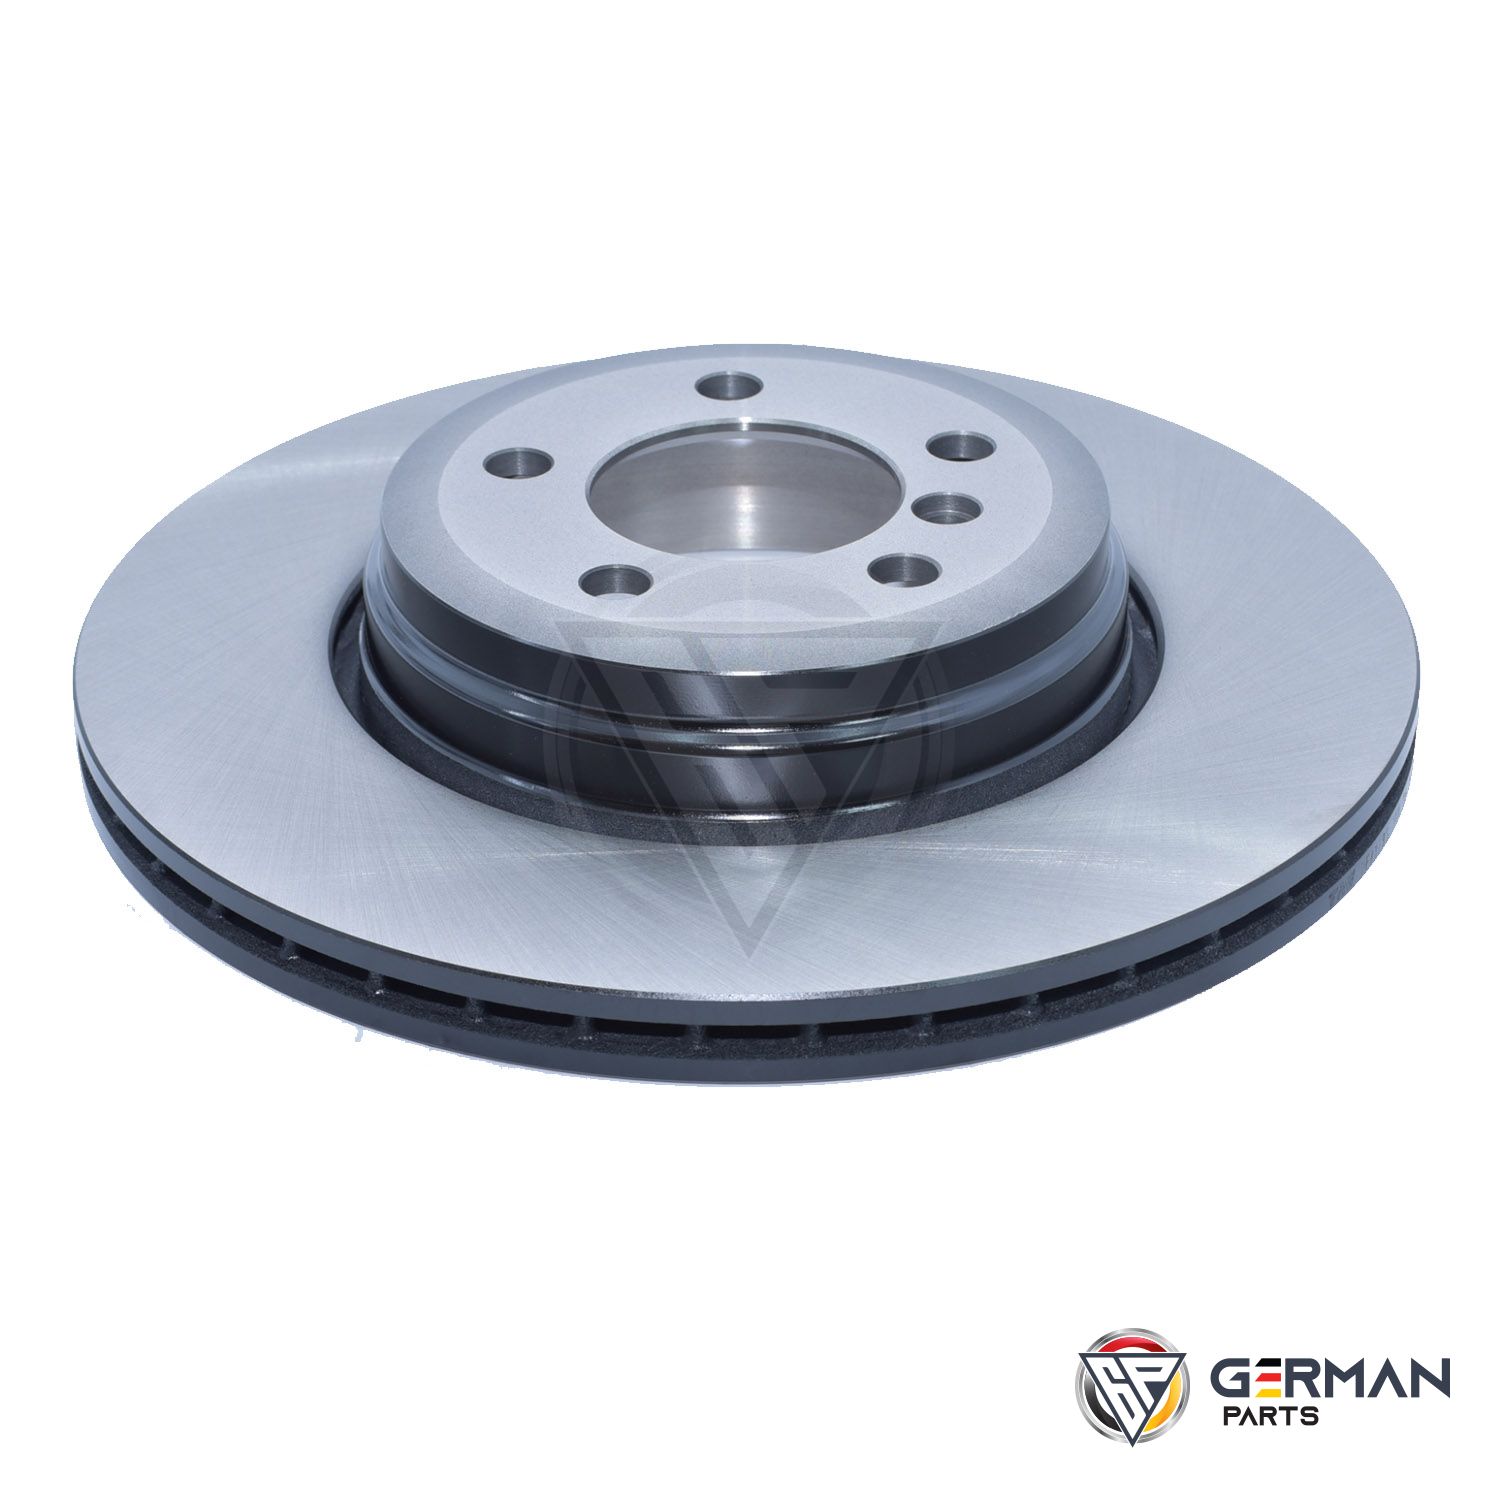 Buy TRW Rear Brake Disc 34216864046 - German Parts